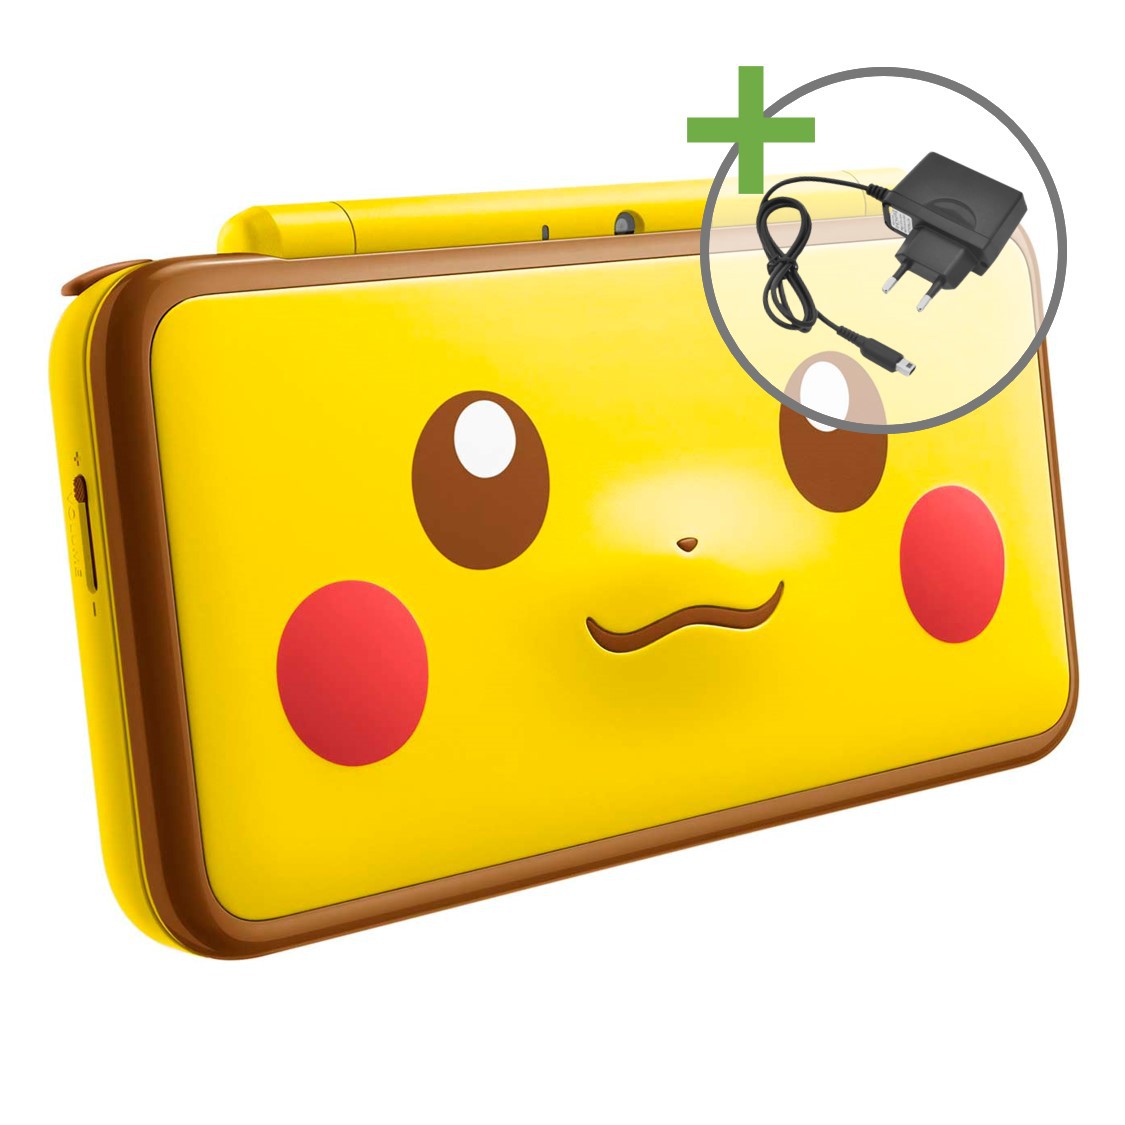 New Nintendo 2DS XL - Pikachu Edition [Complete] - Nintendo 3DS Hardware - 3